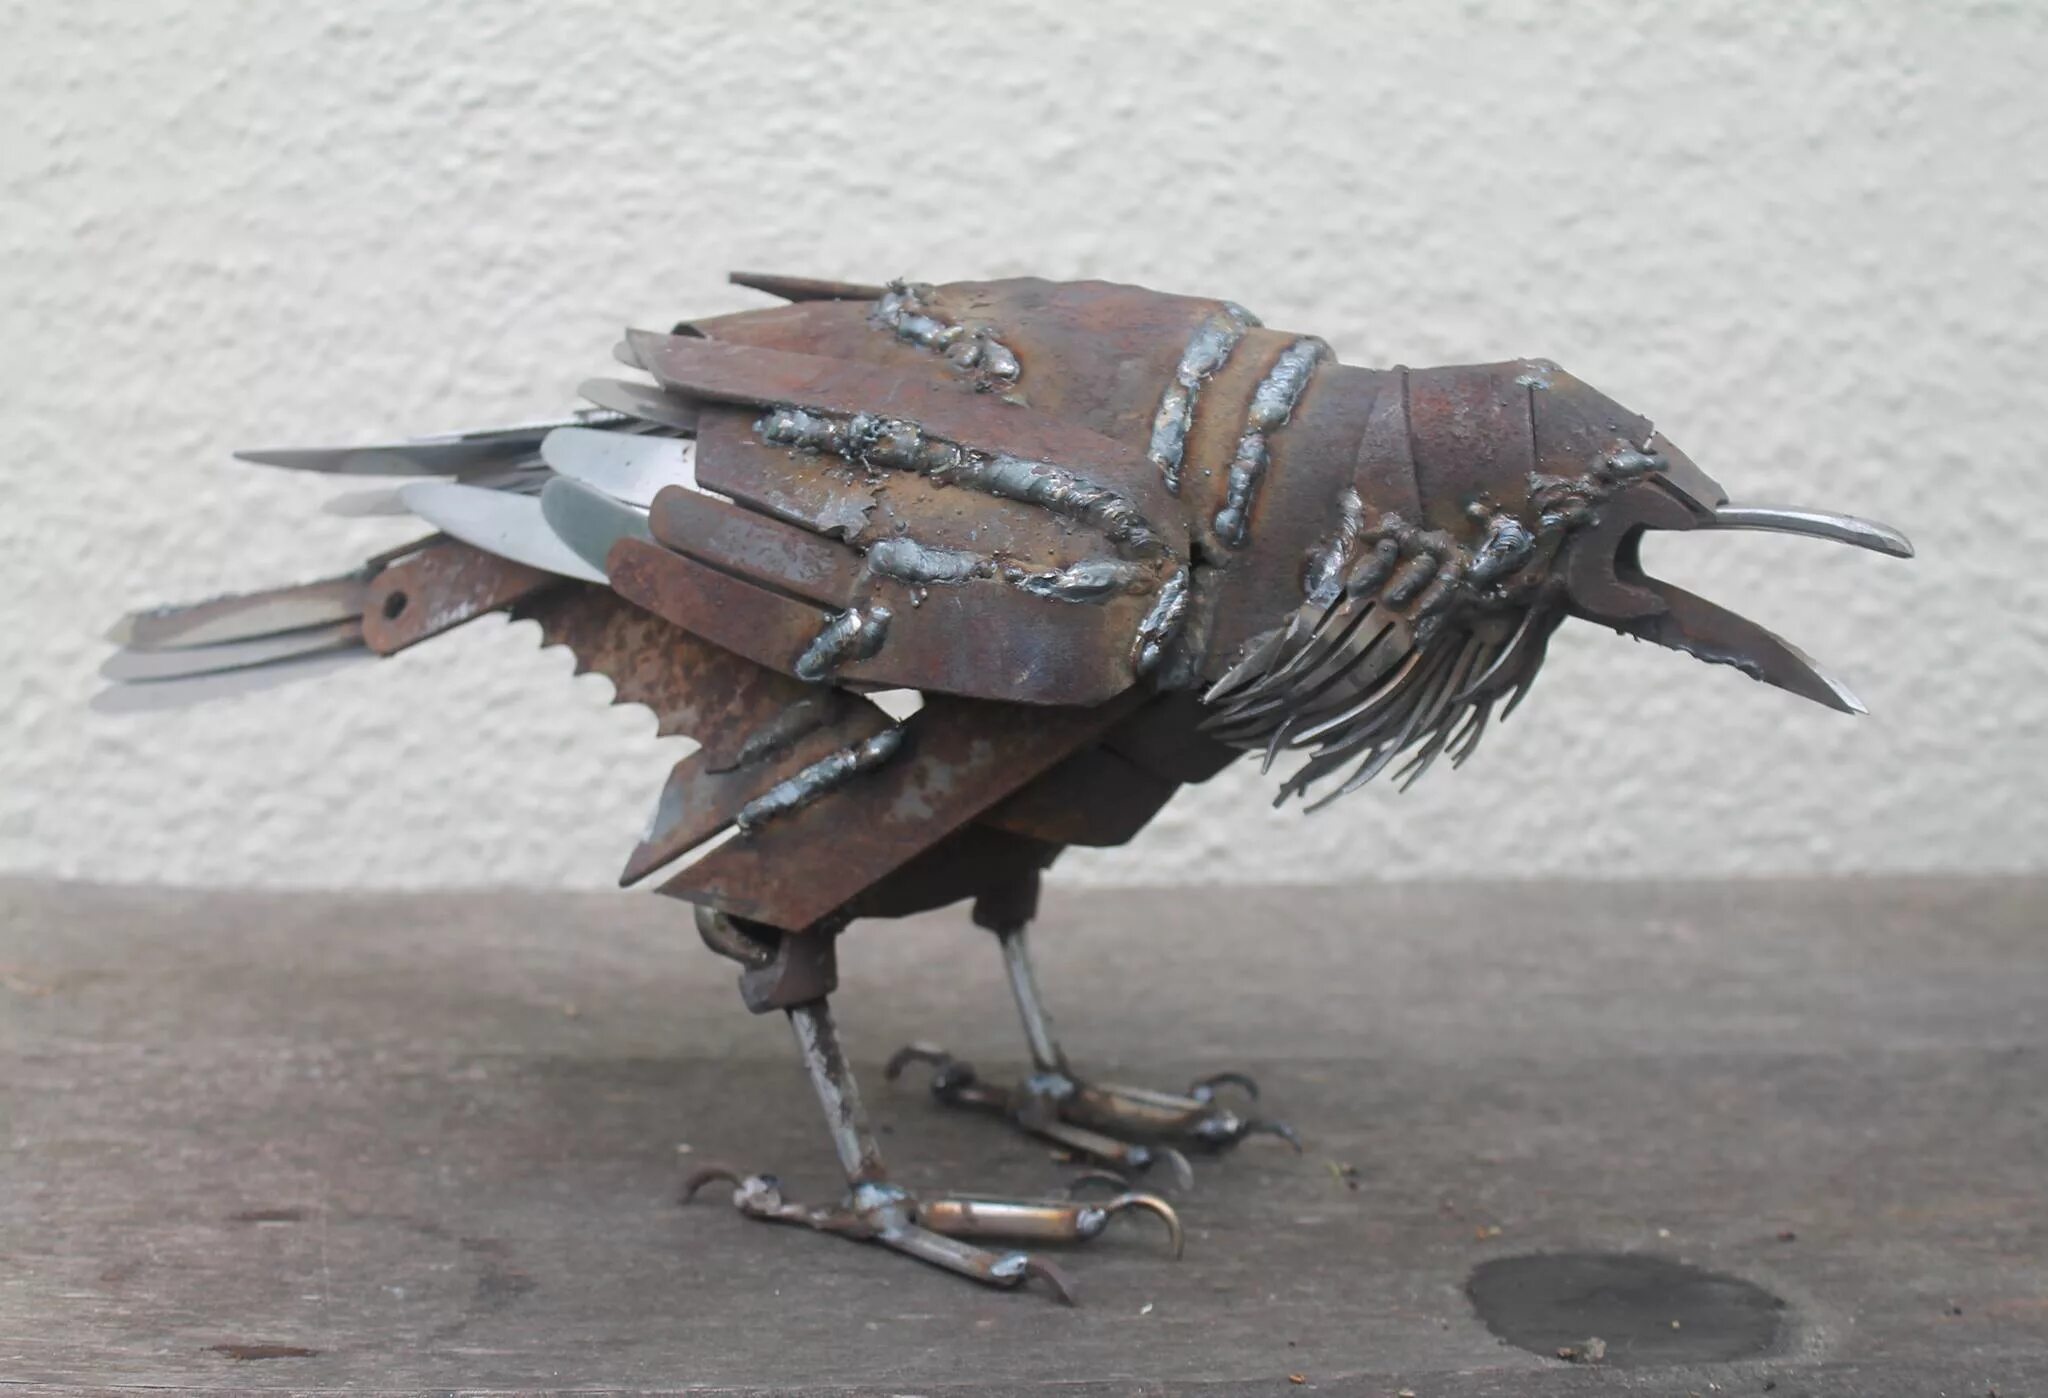 Птицы едят железо. Птица из металлолома. Скульптуры из металлолома. Фигурки птиц из металла. Скульптуры птиц из металла.